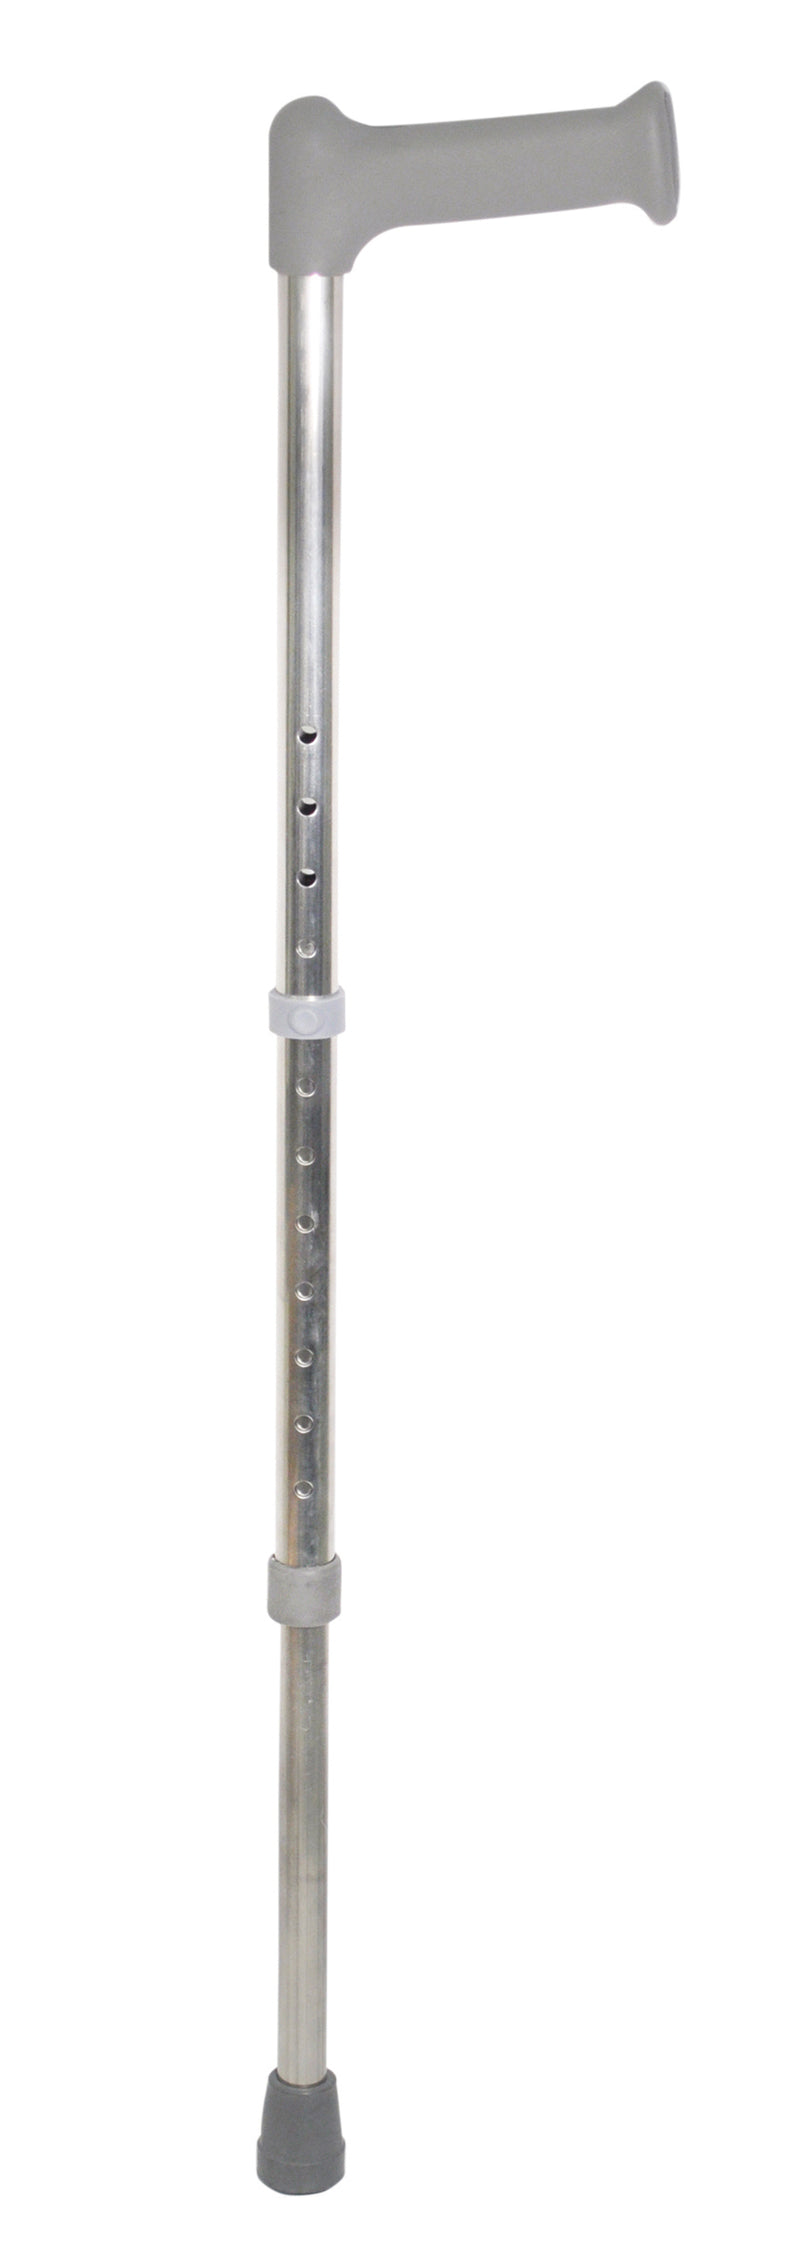 Aluminium Walking Stick Large Adjustable Height.